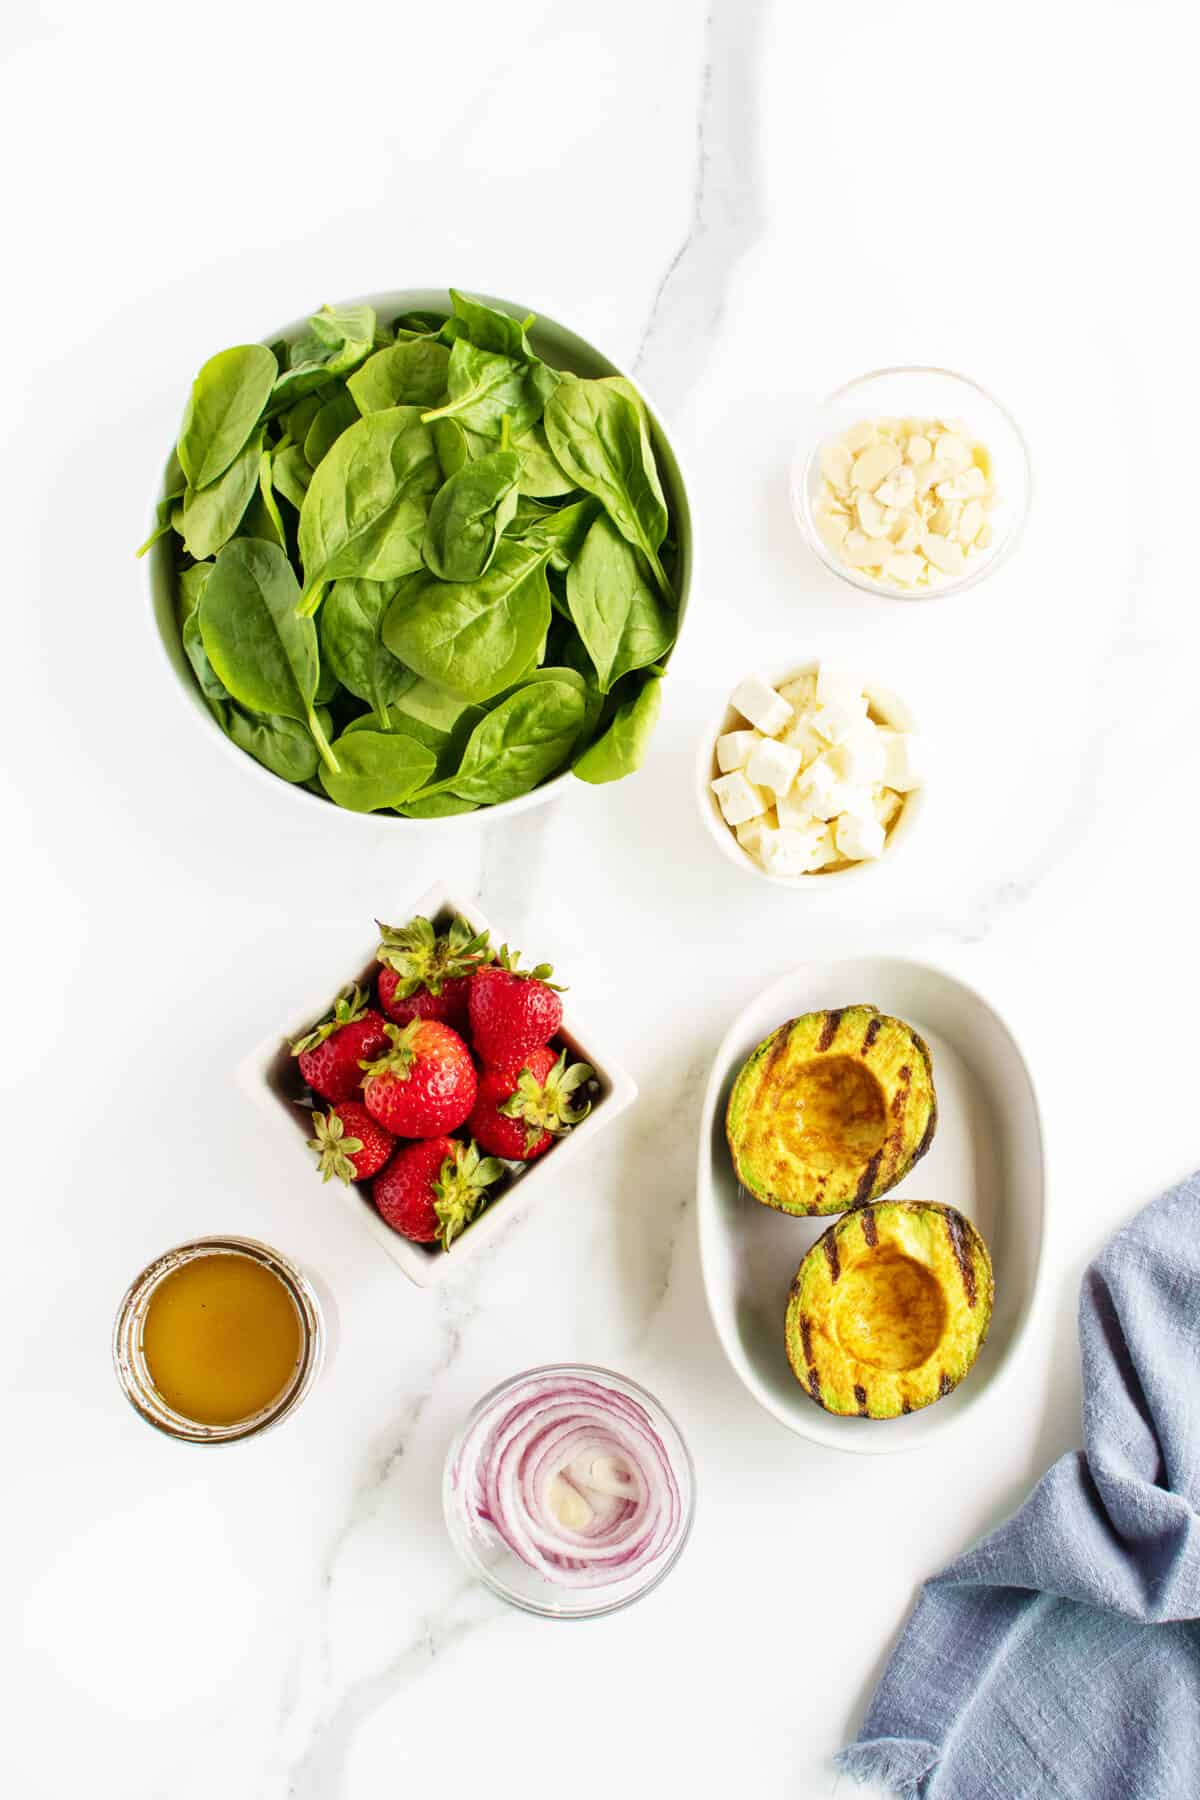 Strawberry spinach salad ingredients